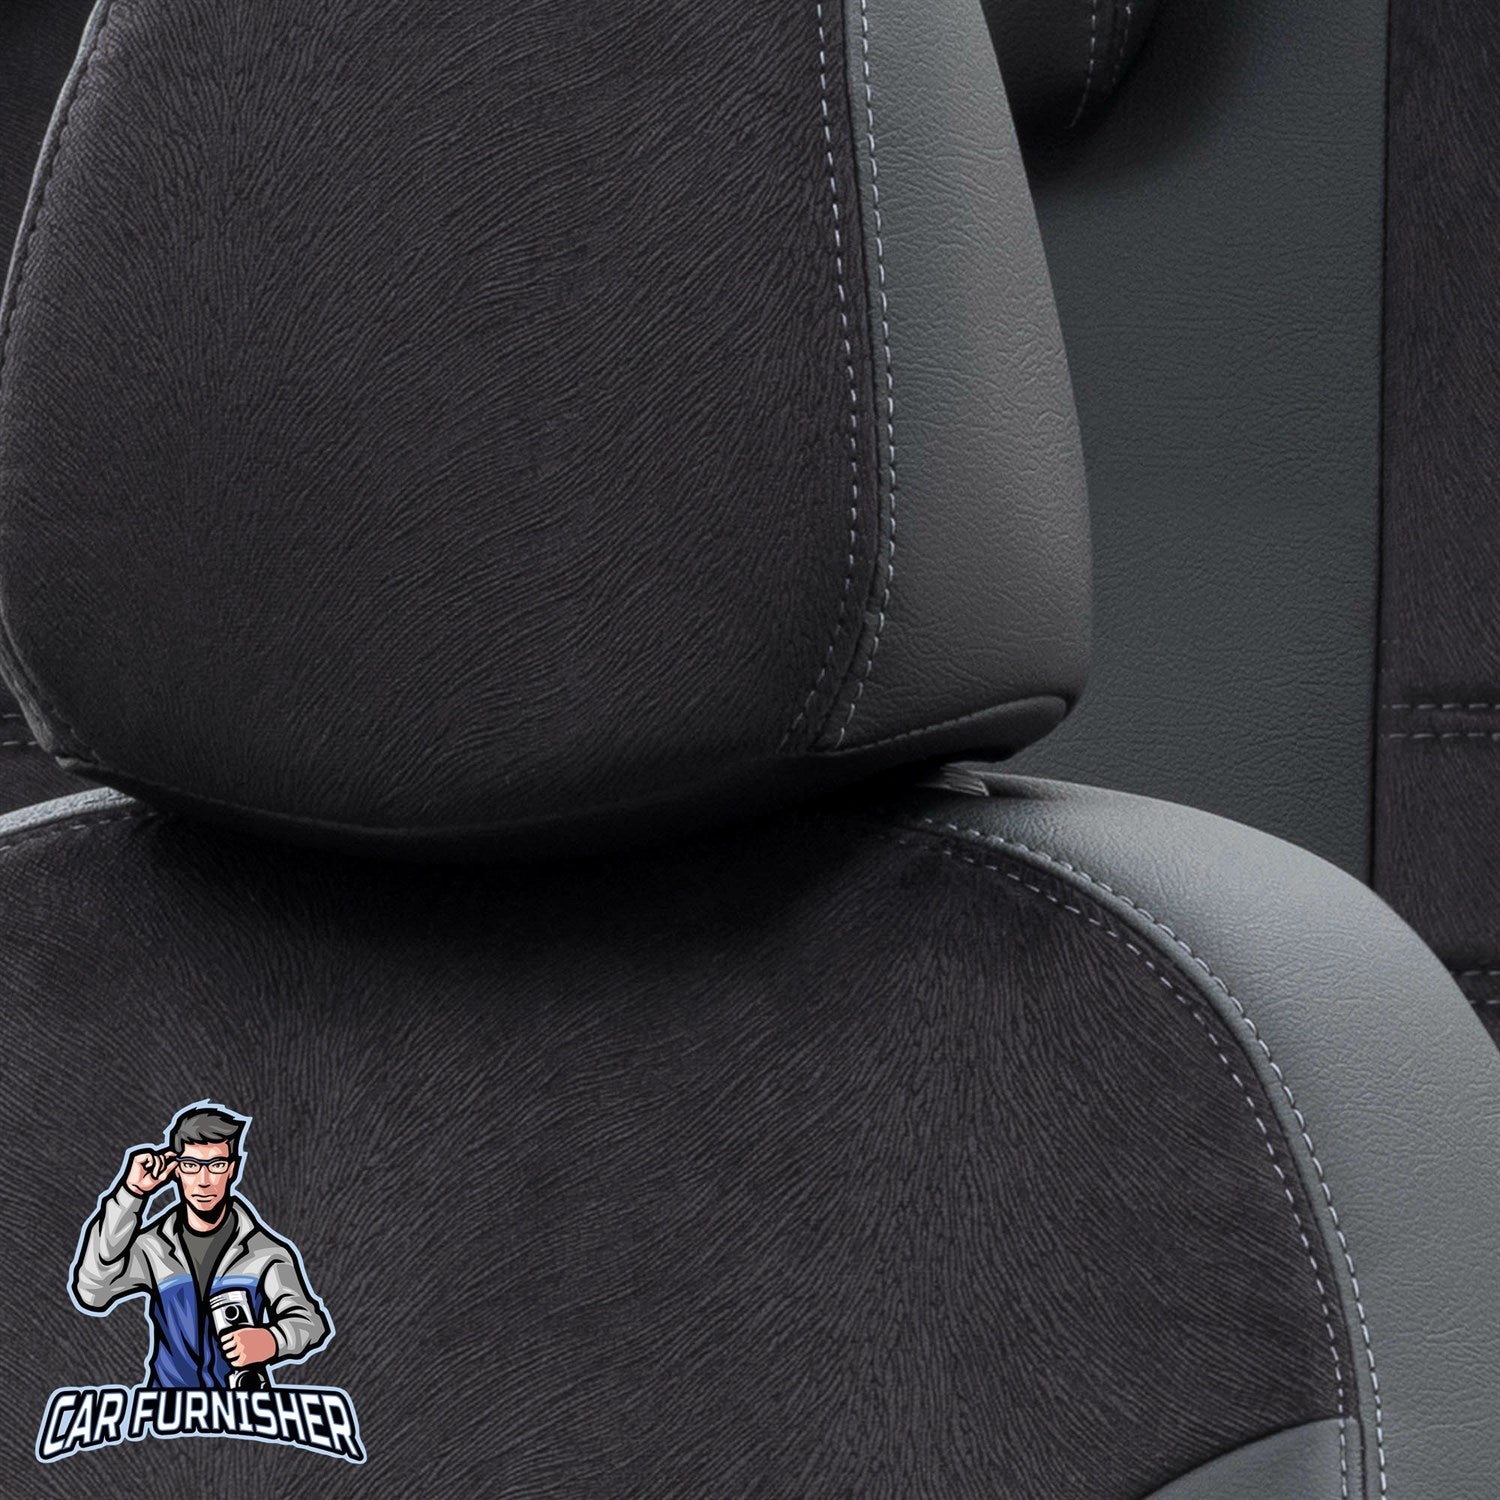 VW Bora Car Seat Cover 1998-2006 1J London Design Black Full Set (5 Seats + Handrest) Leather & Fabric